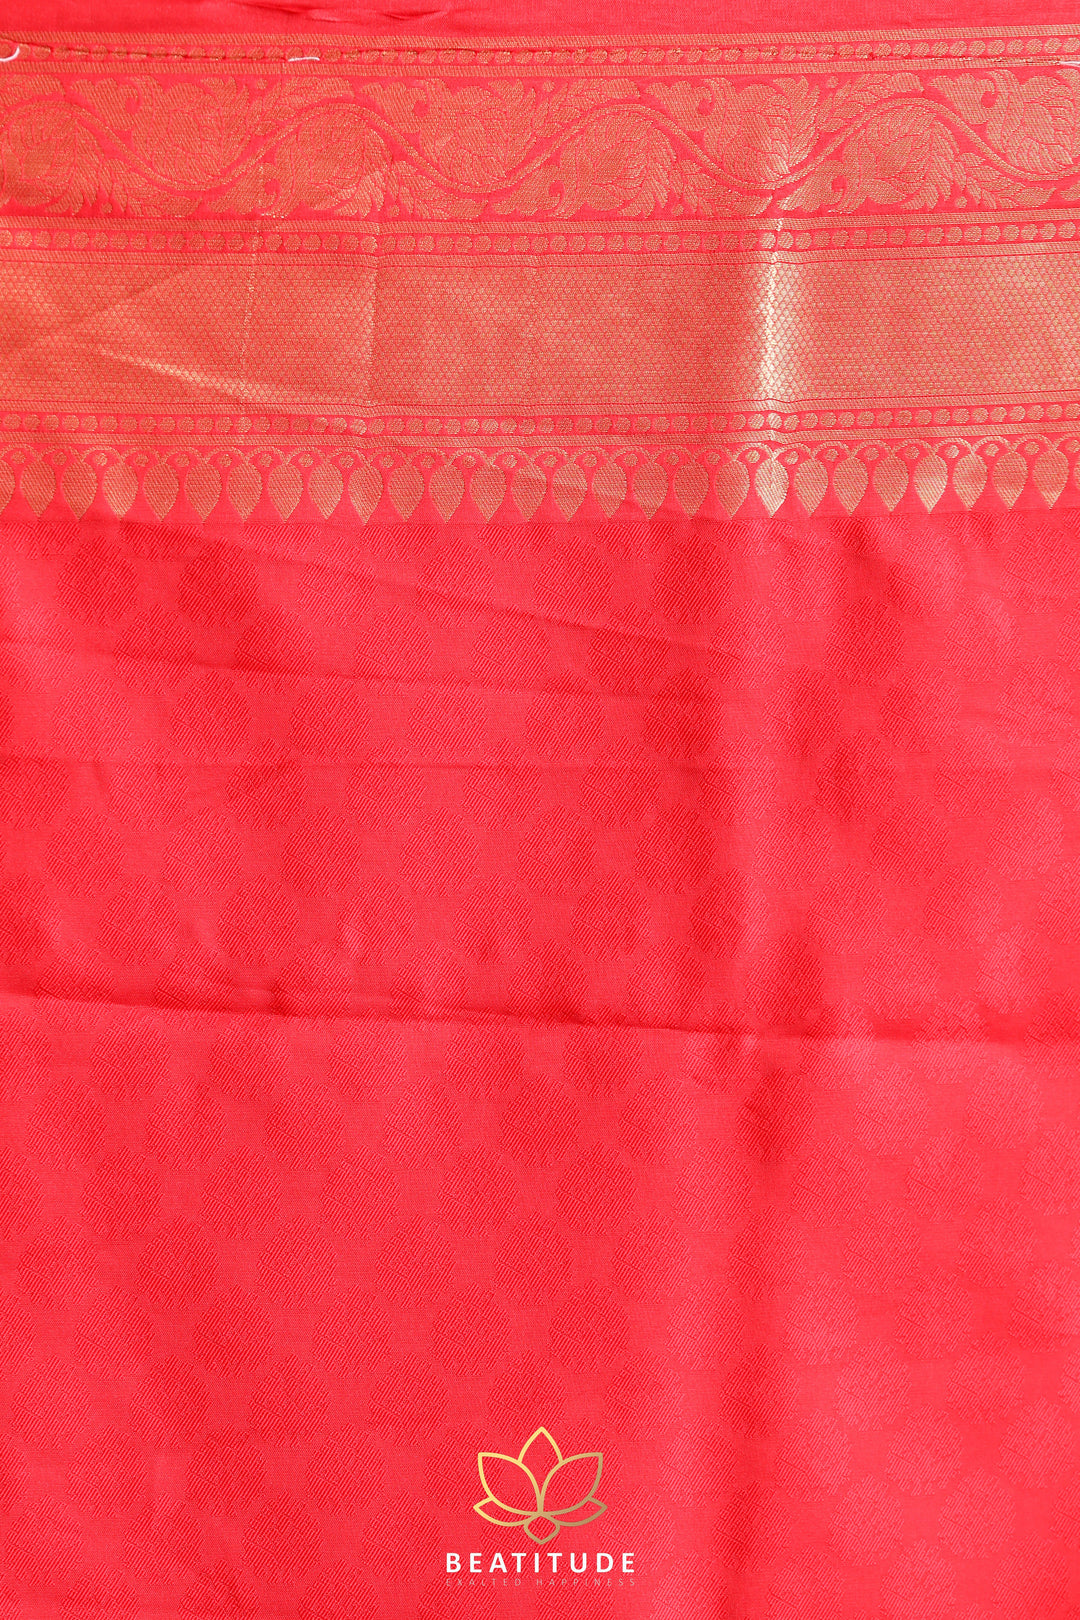 Beatitude Red Banarasi Saree with Unstitched Blouse